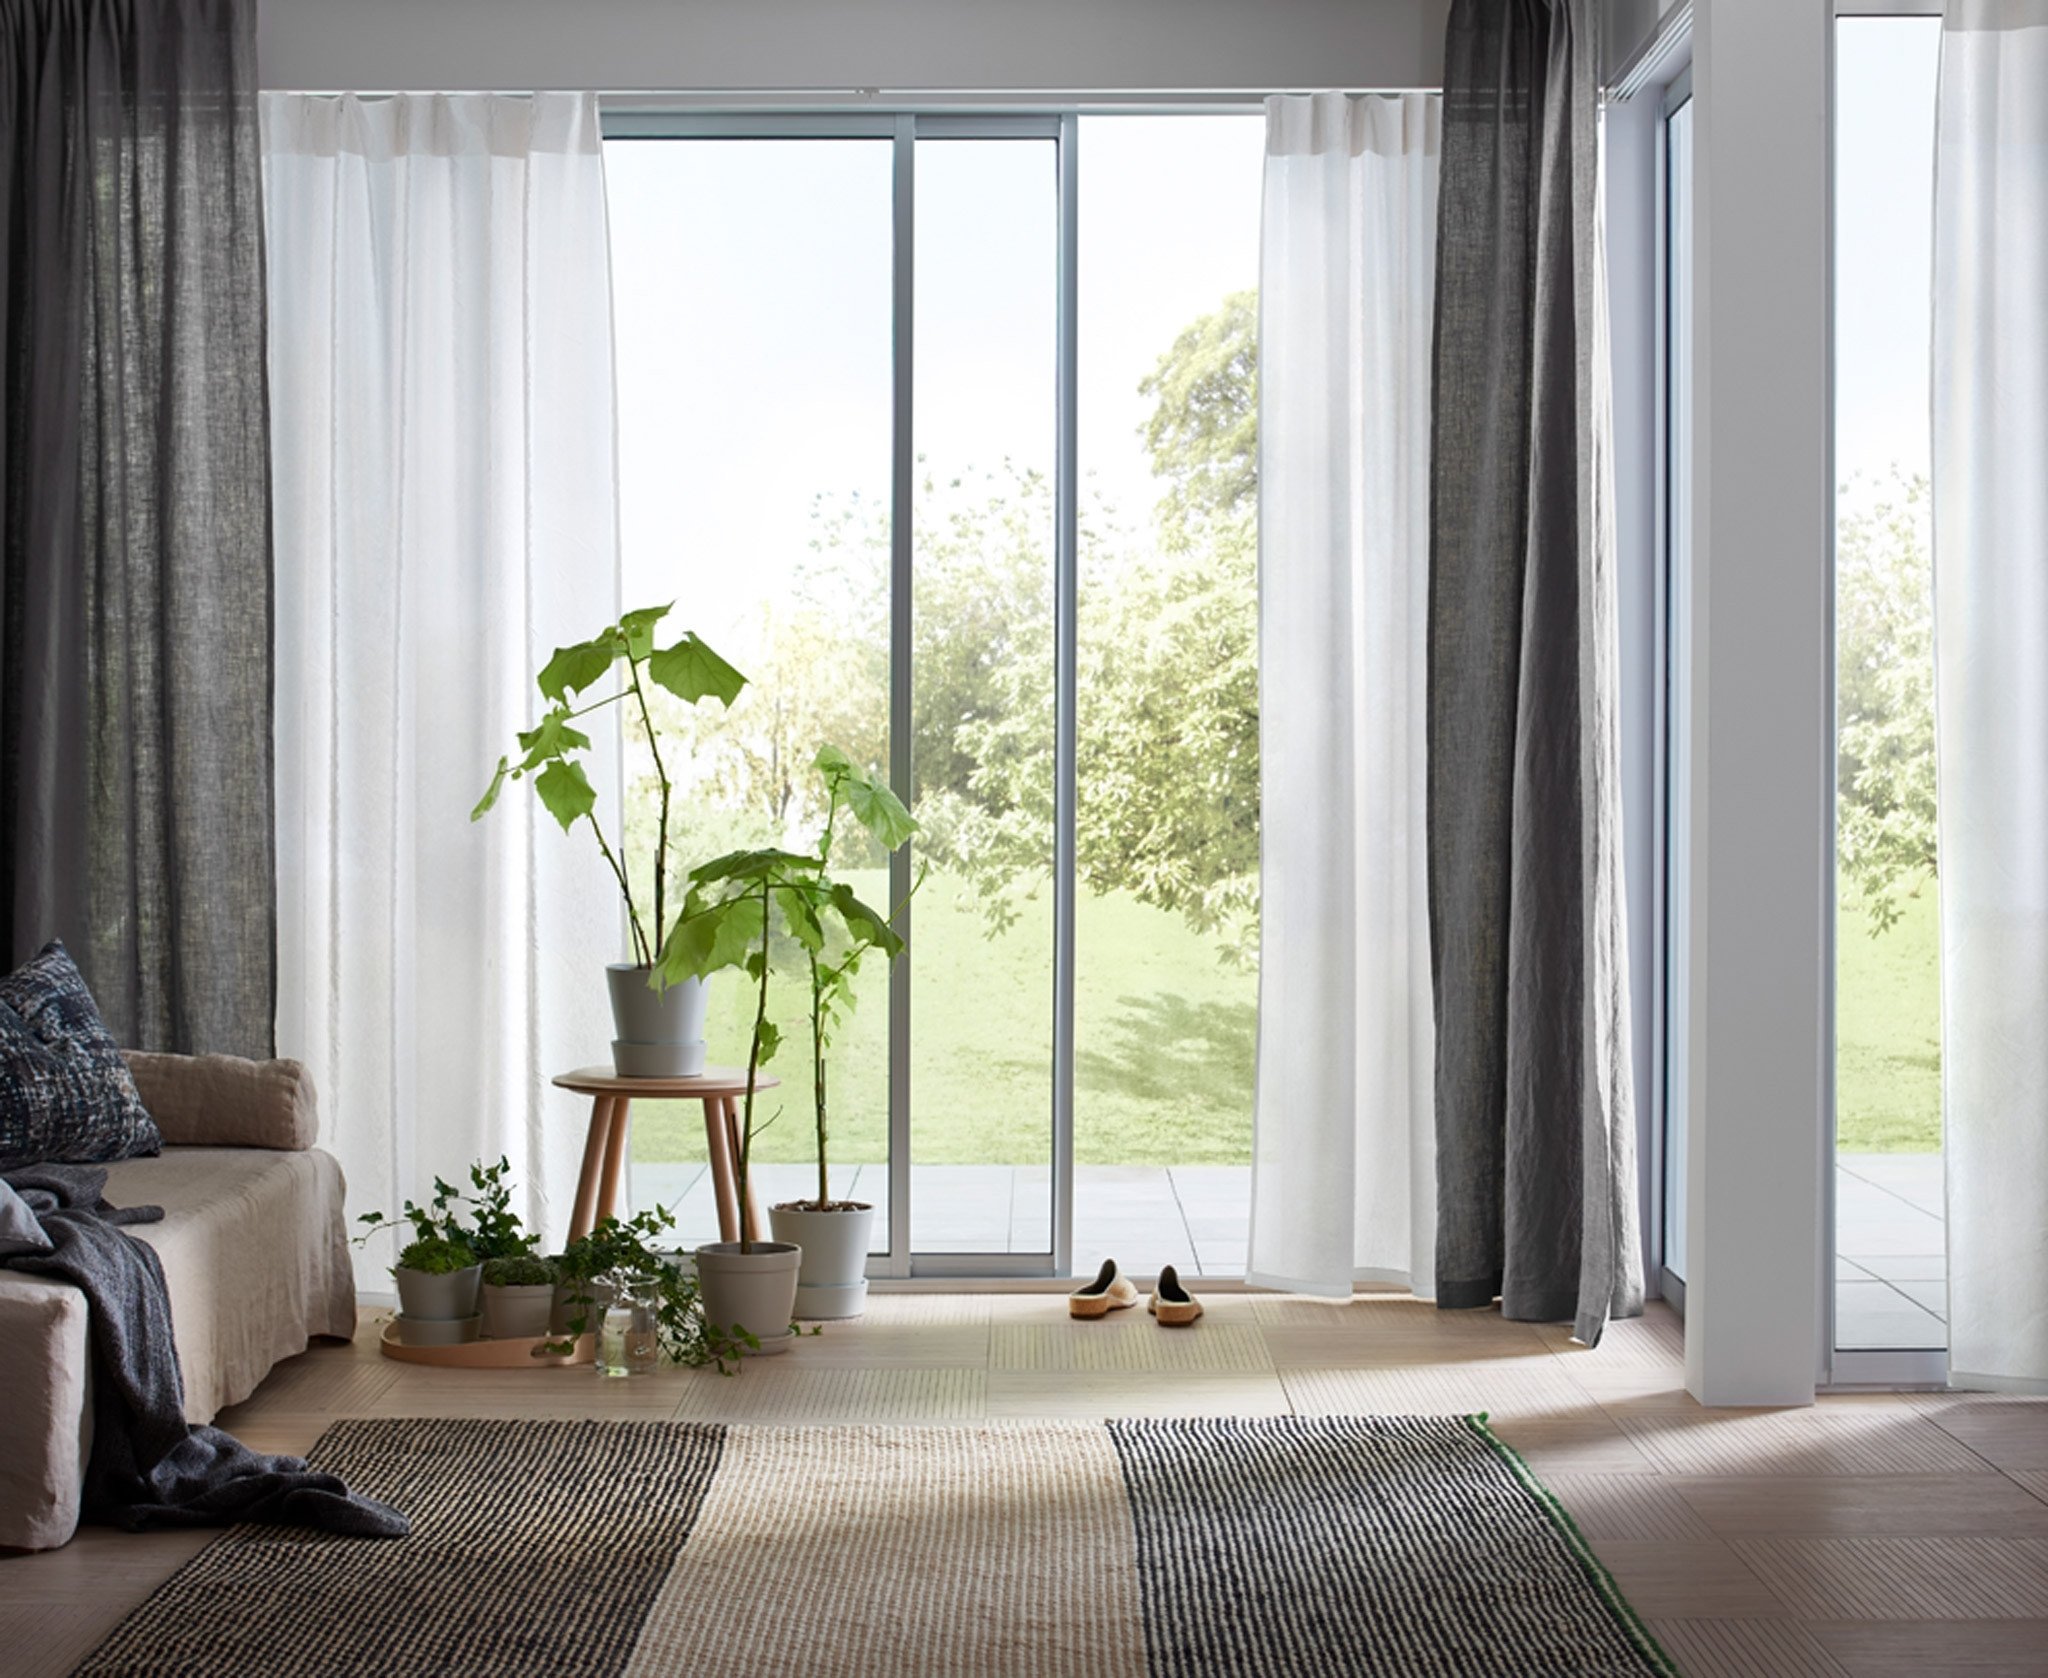 10 Lovely Curtain Ideas For Living Room decorating curtains for drawing room hall curtain design living room 2022